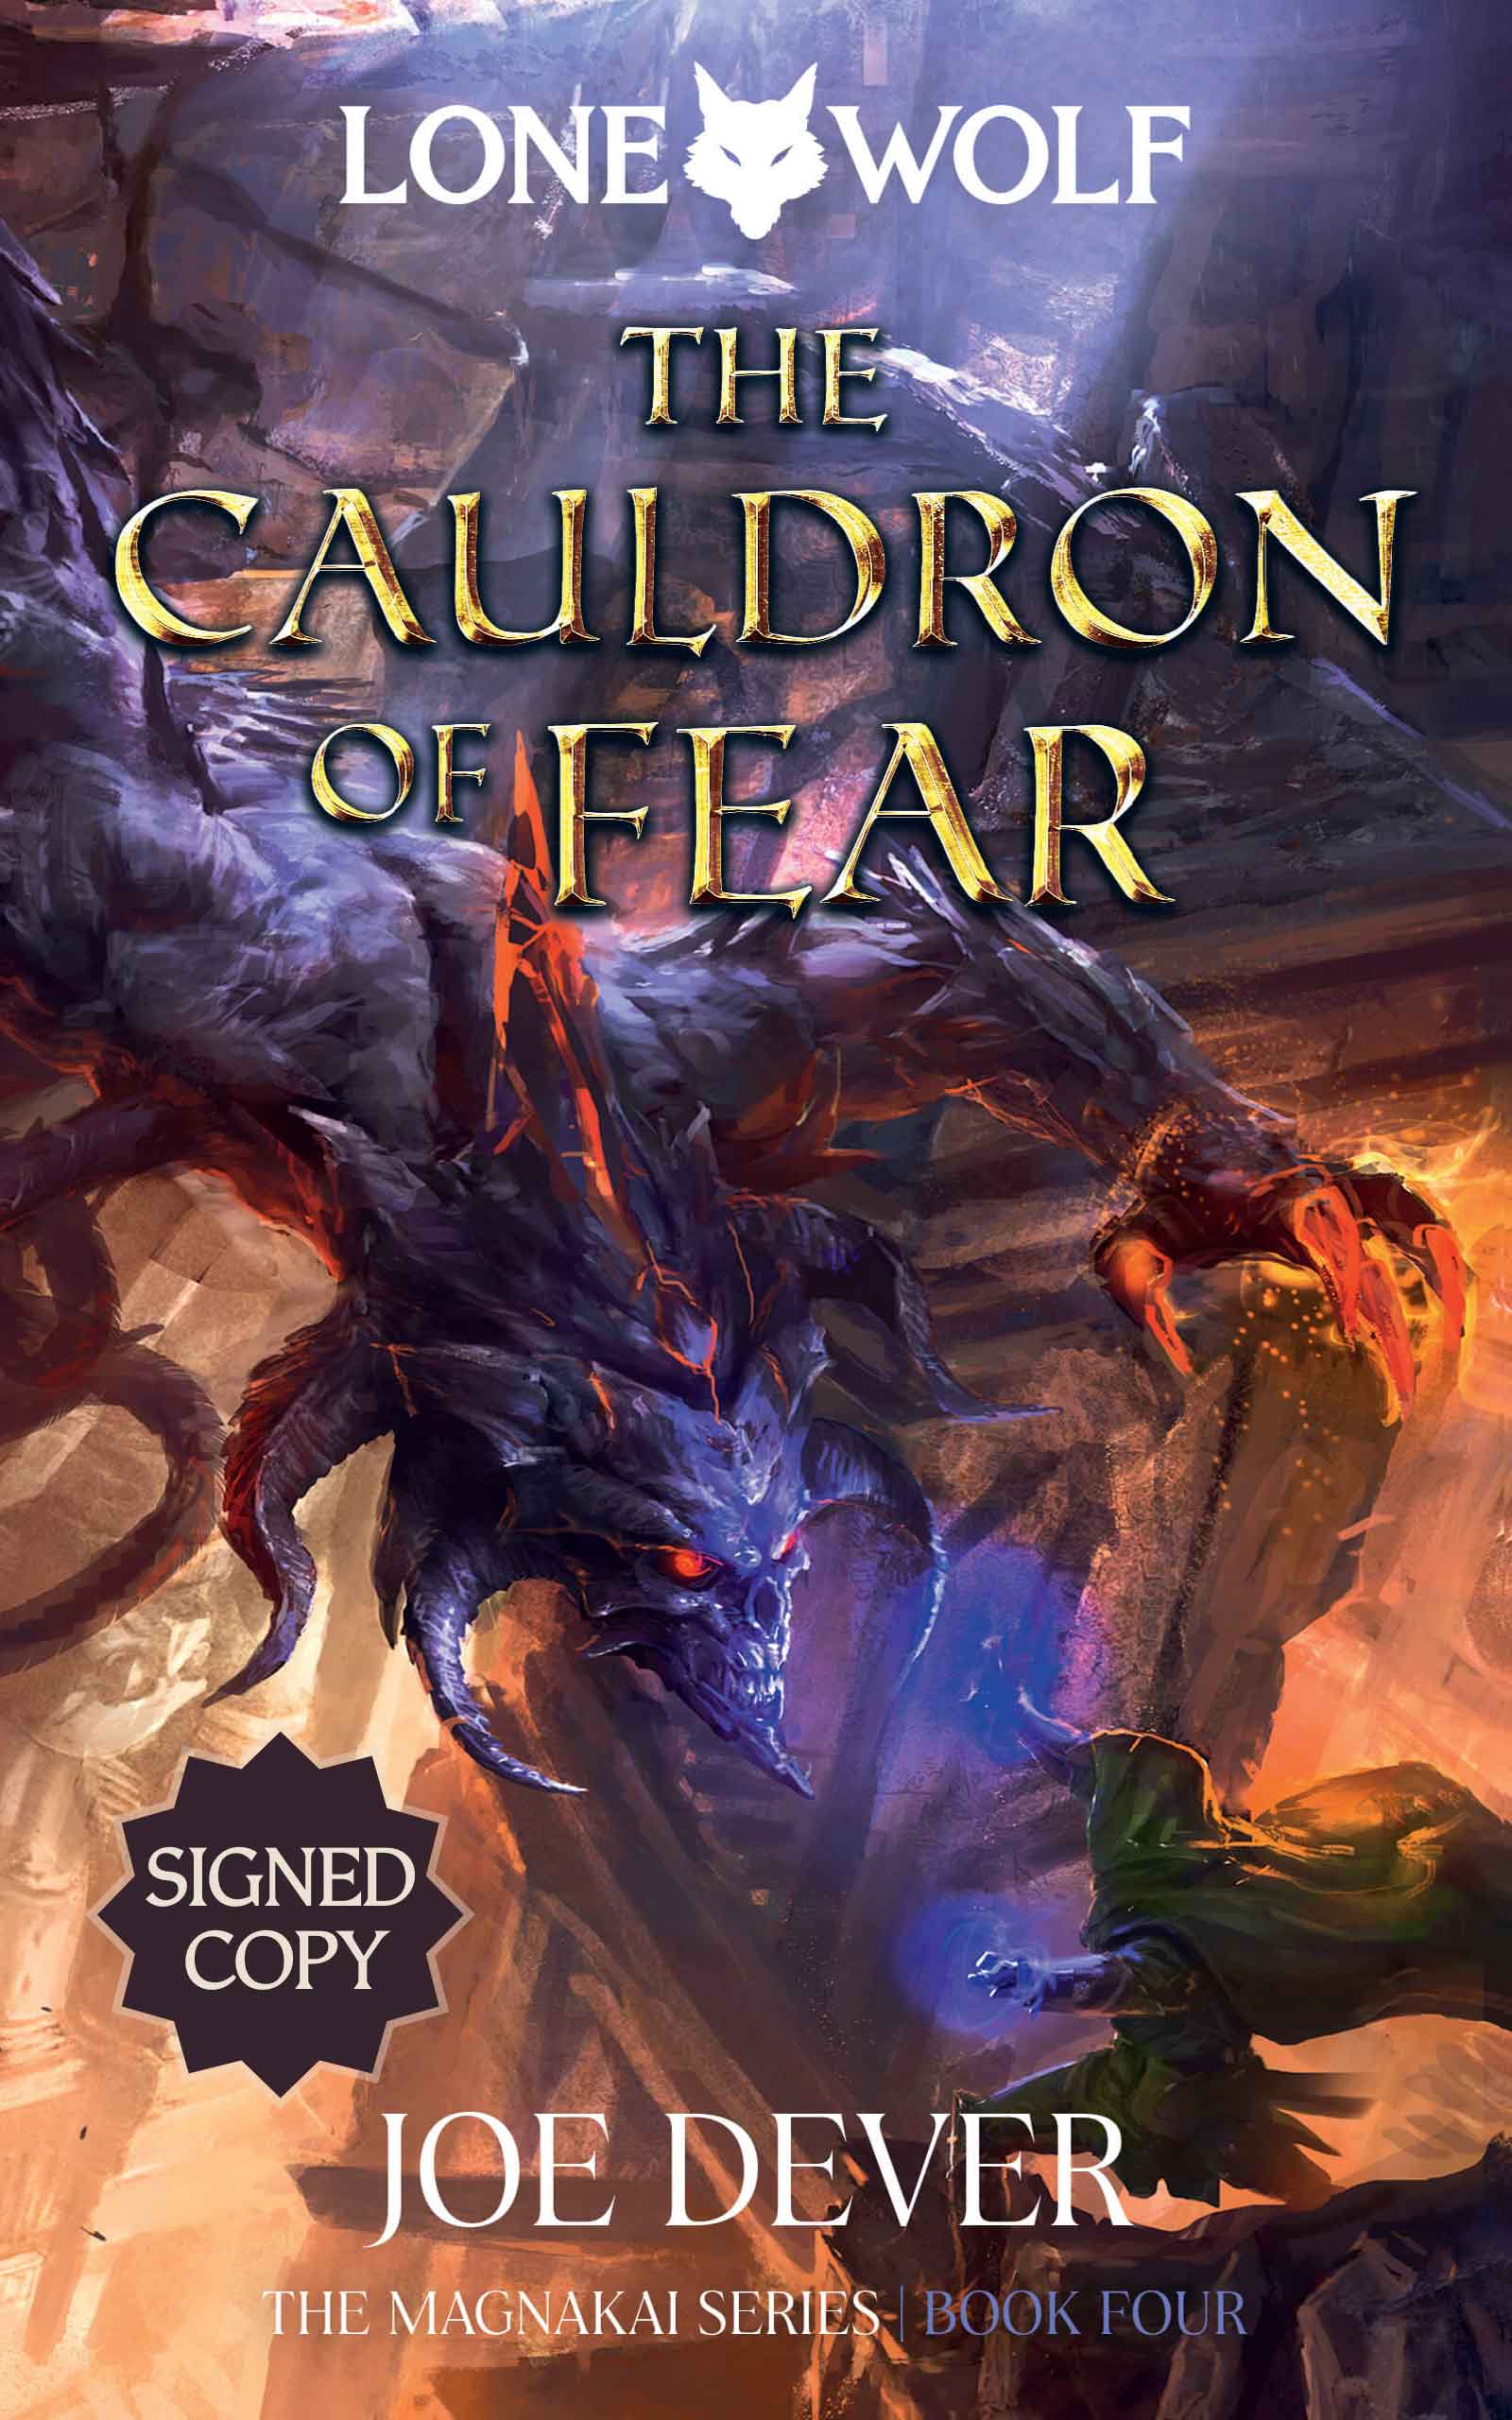 The Cauldron of Fear: Lone Wolf #9 - LIMITED SIGNED HARDBACK